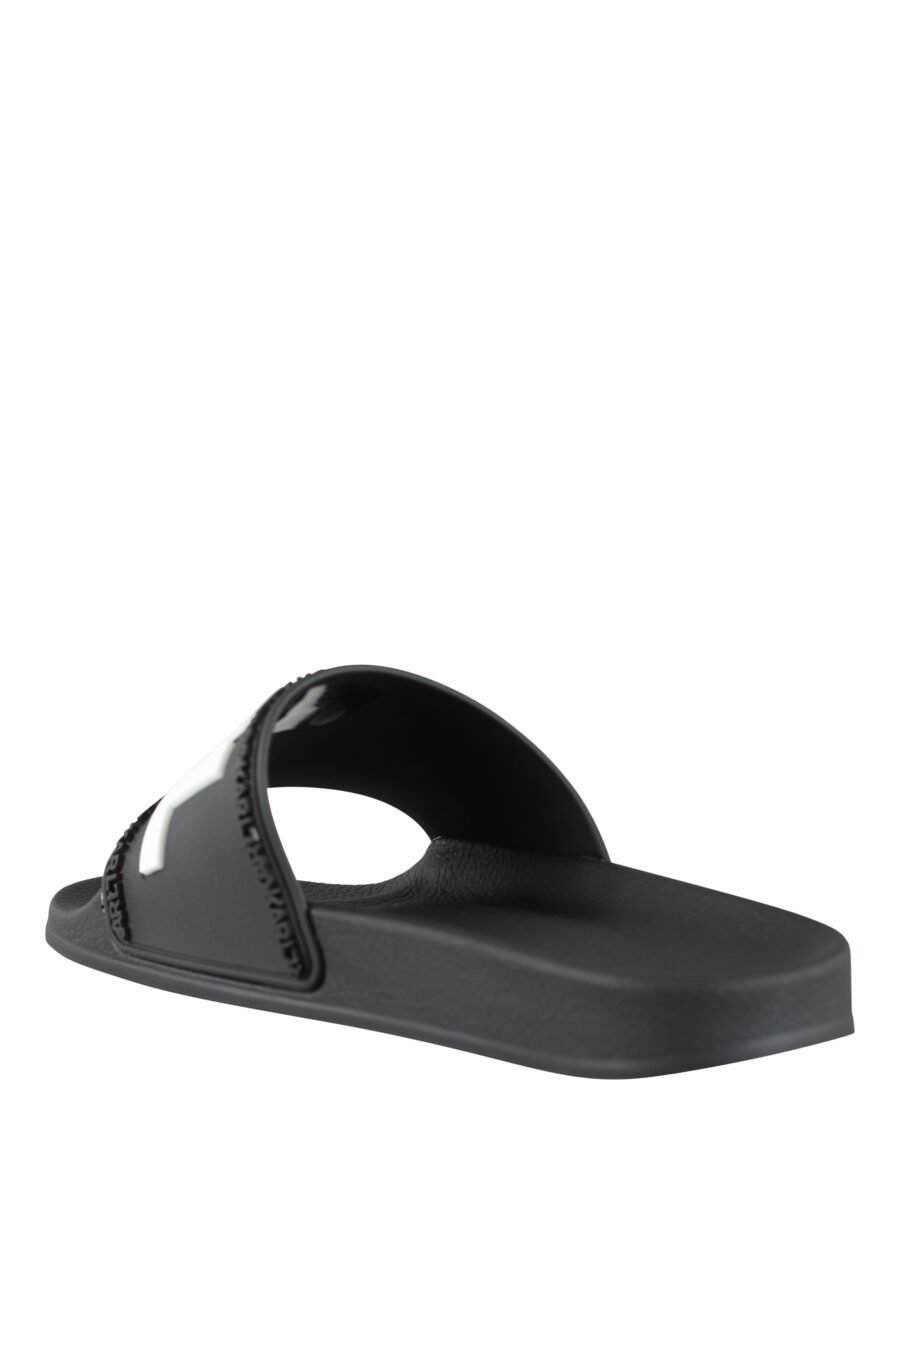 Black rubber flip flops with white maxilogo - IMG 9587